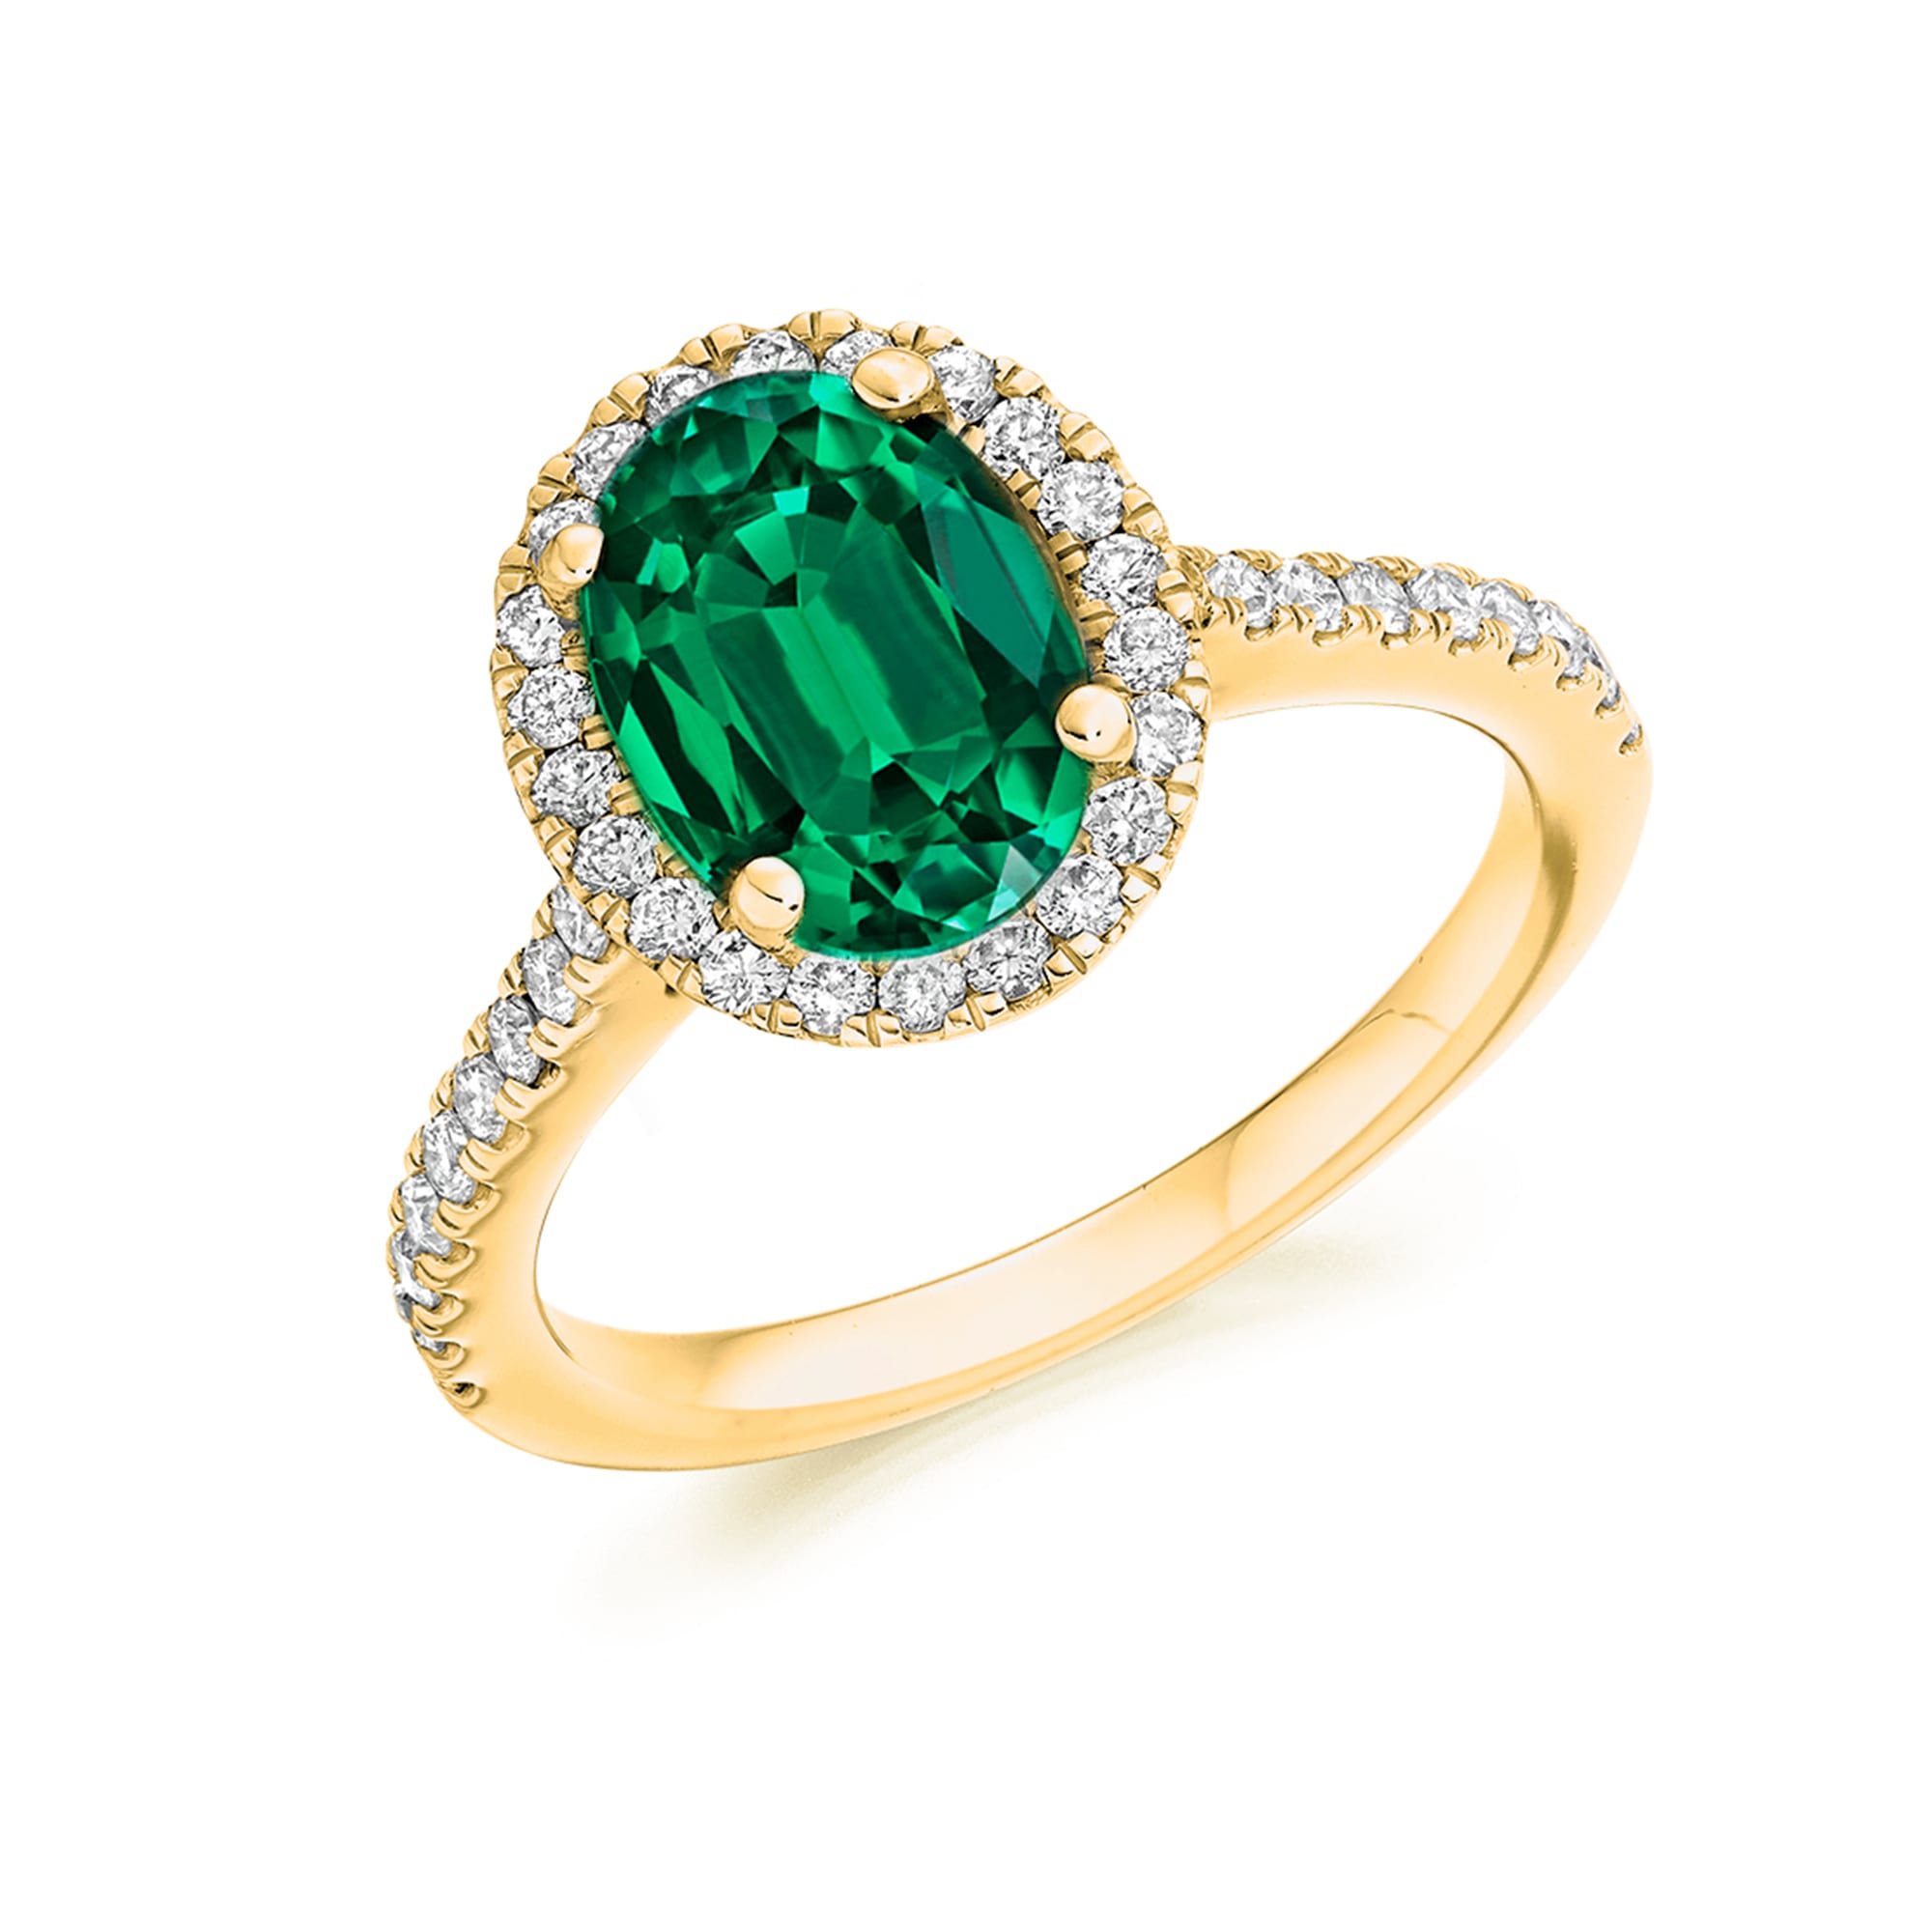 Oval Halo Gemstone Ring - Shrewsbury Jewellers Fabricius Green